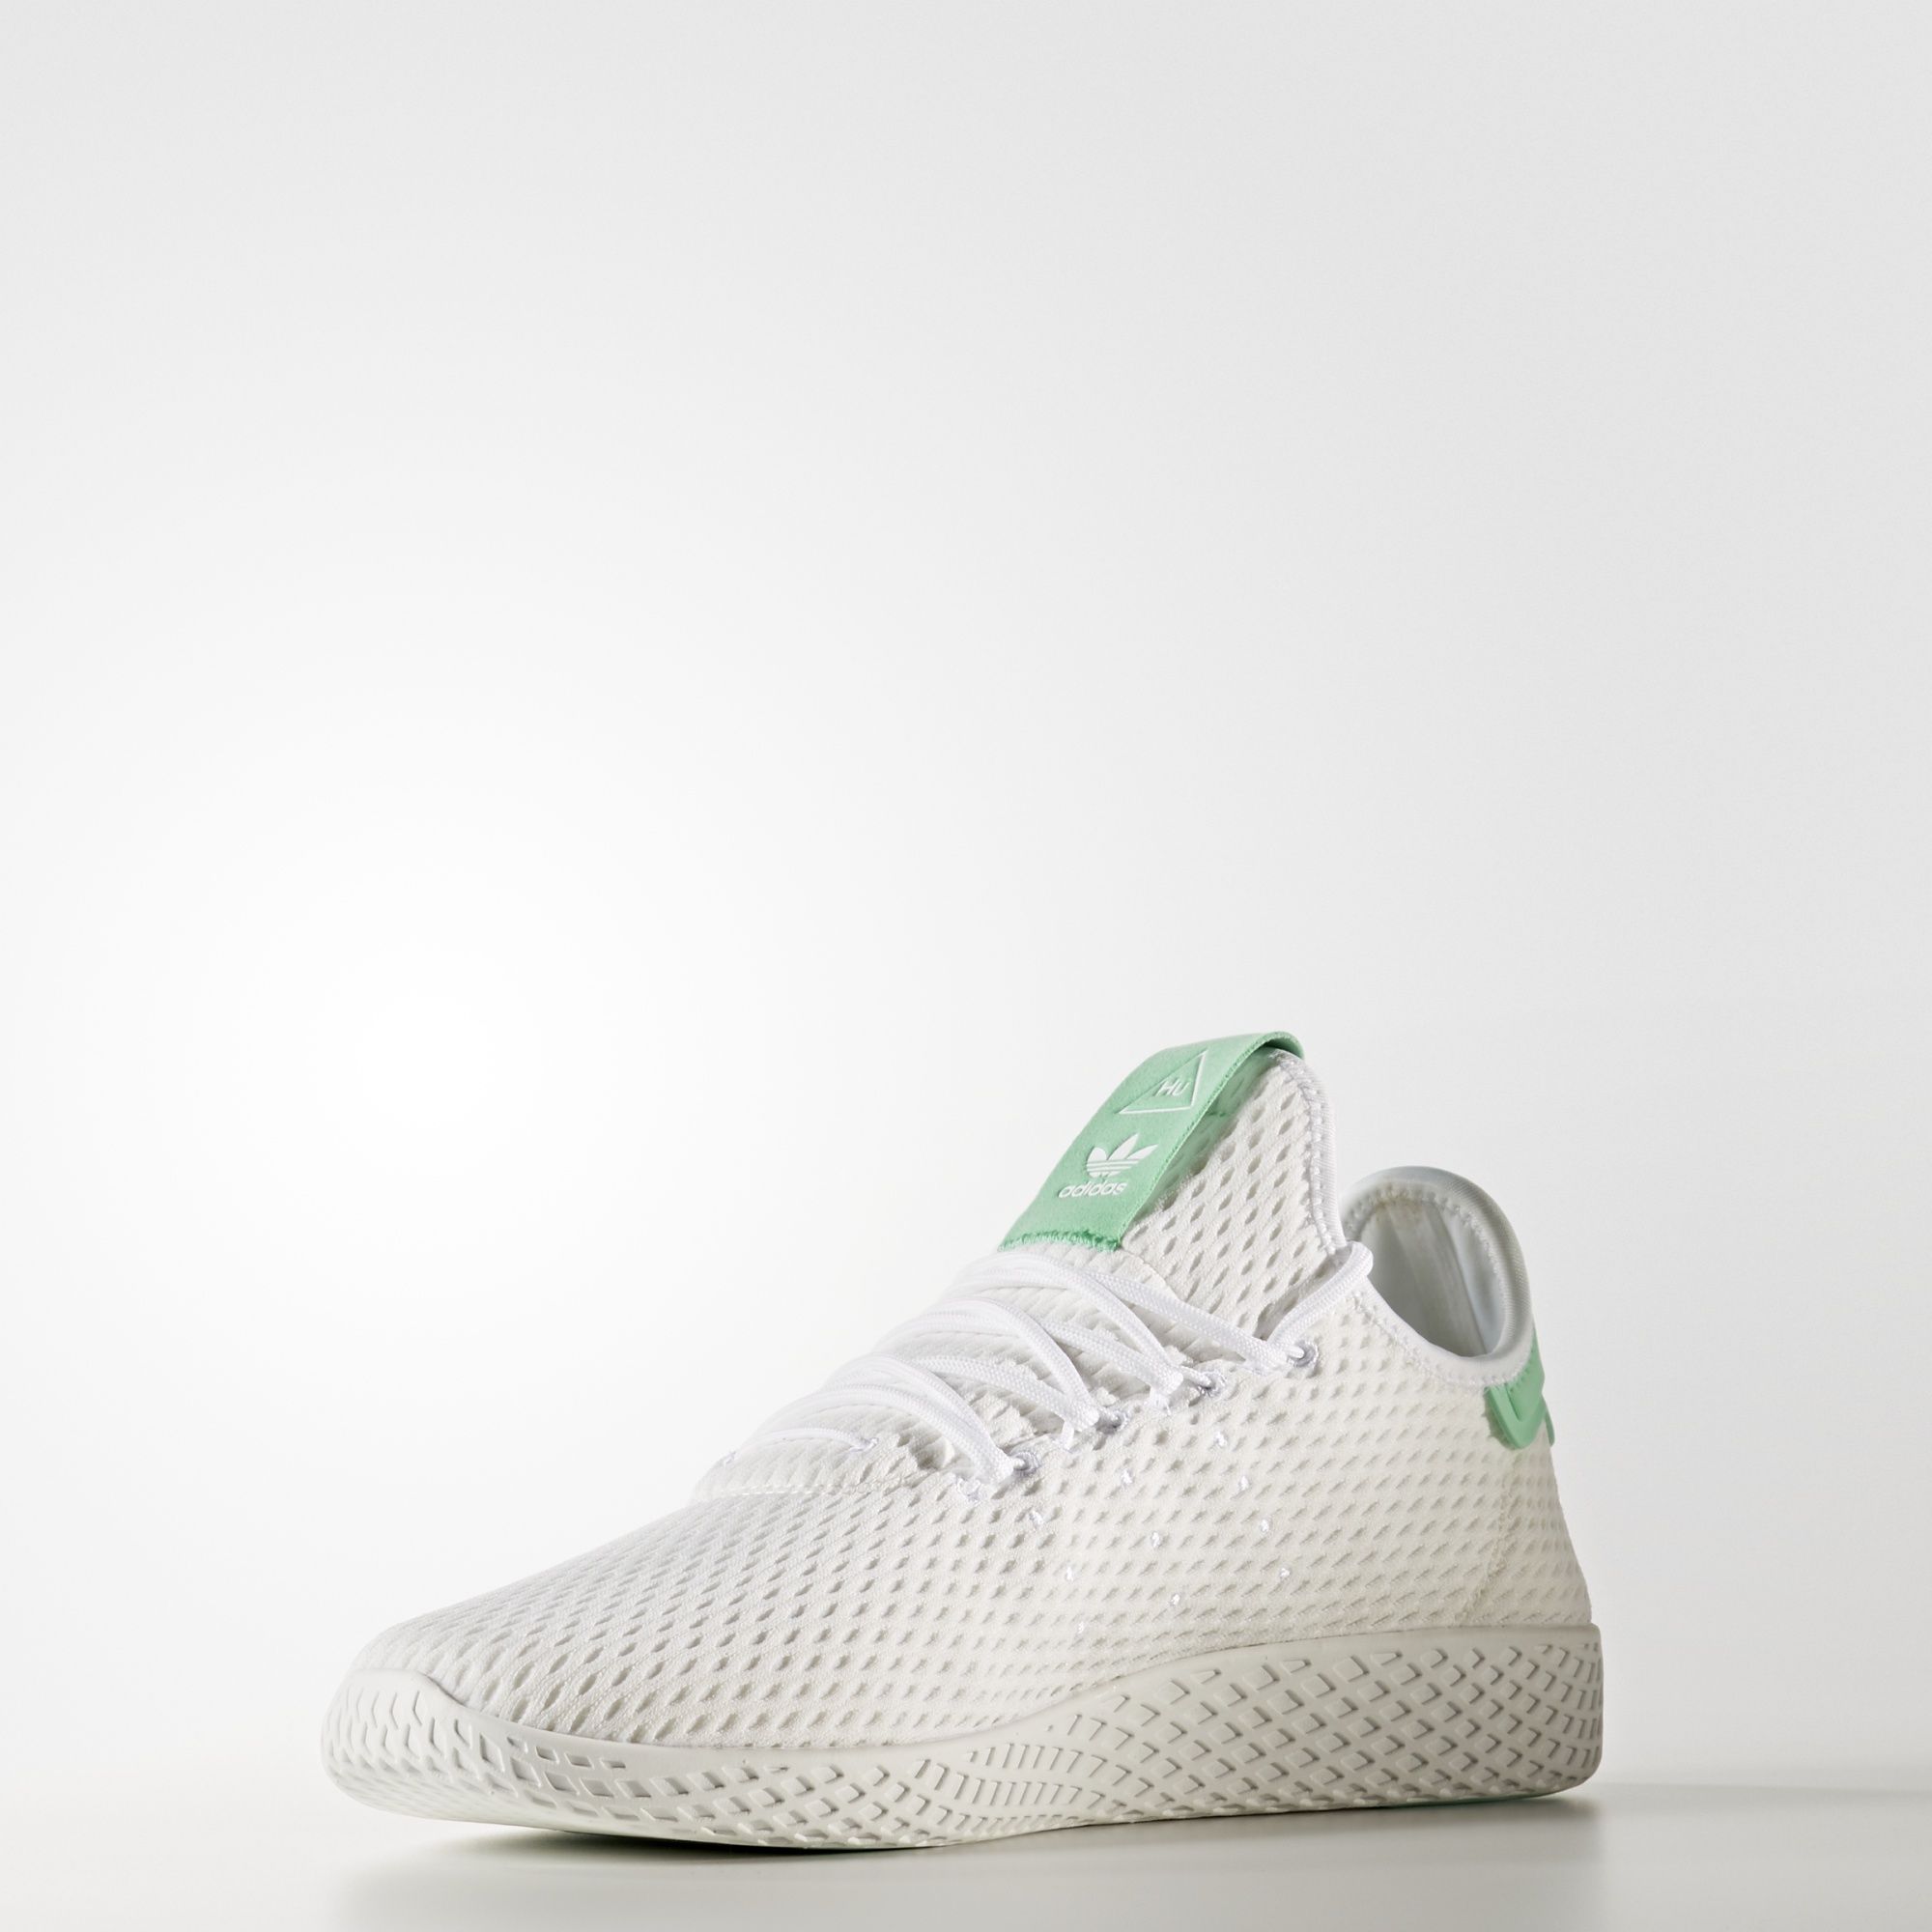 adidas-pharrell-williams-tennis-hu-white-green-glow-3